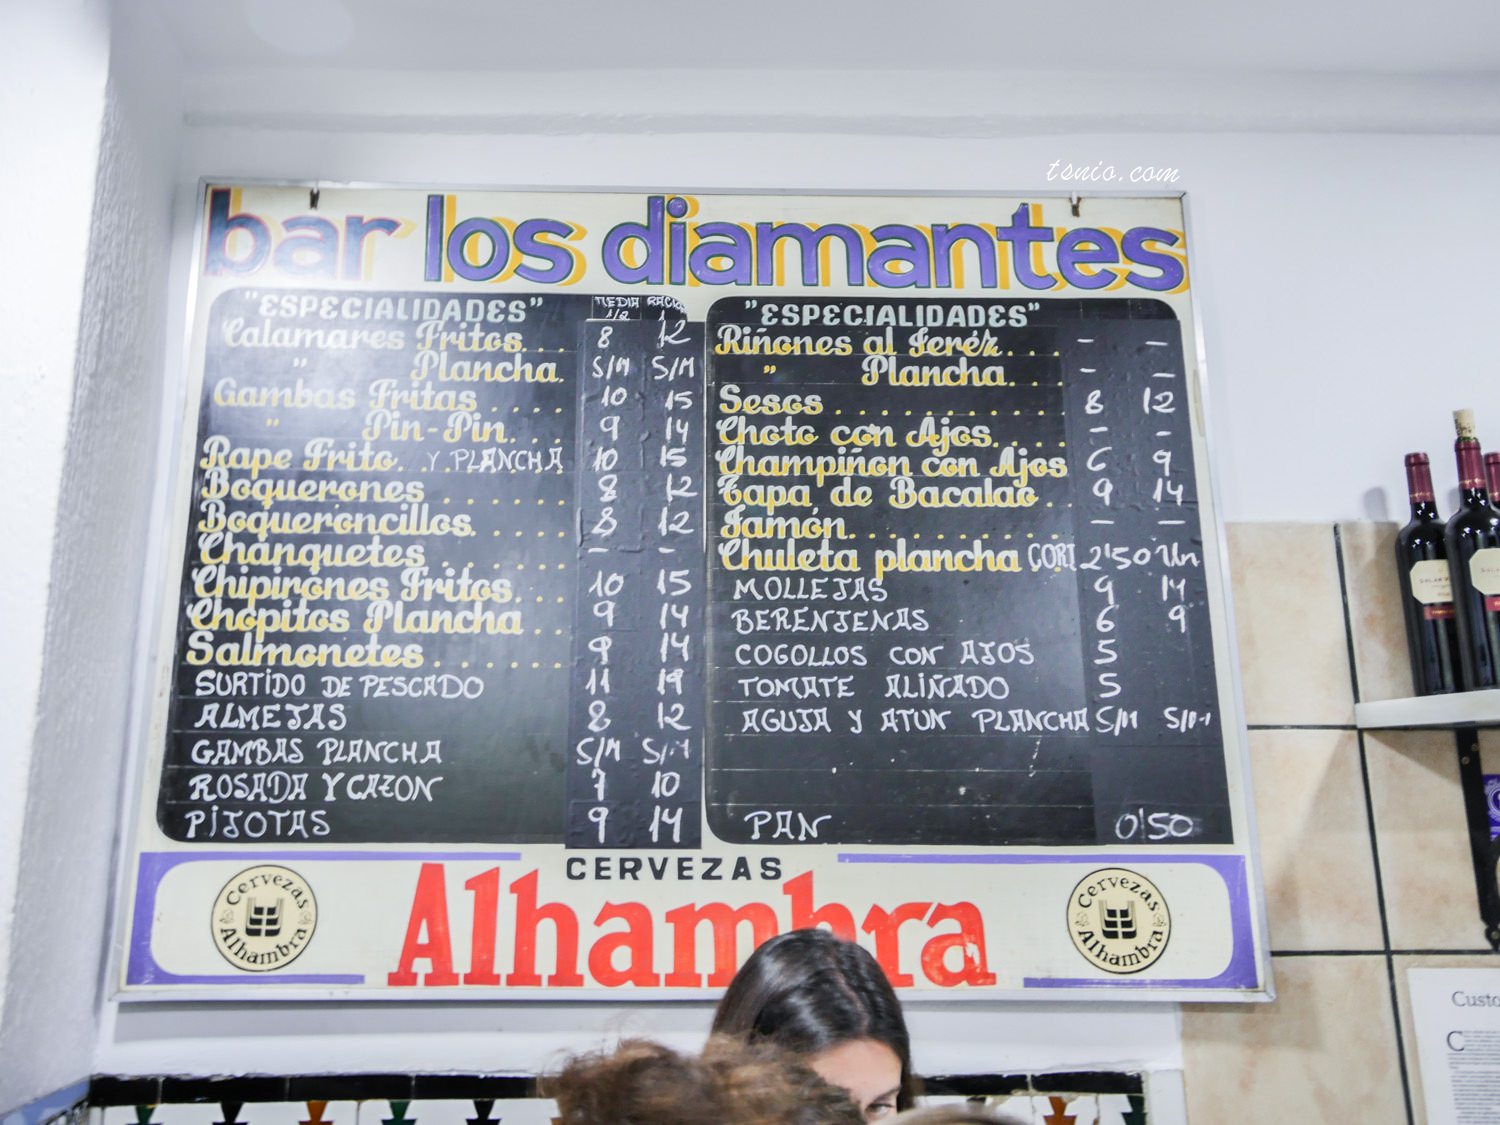 西班牙格拉納達美食推薦 Bar los Diamantes 免費Tapas小酒館餐廳